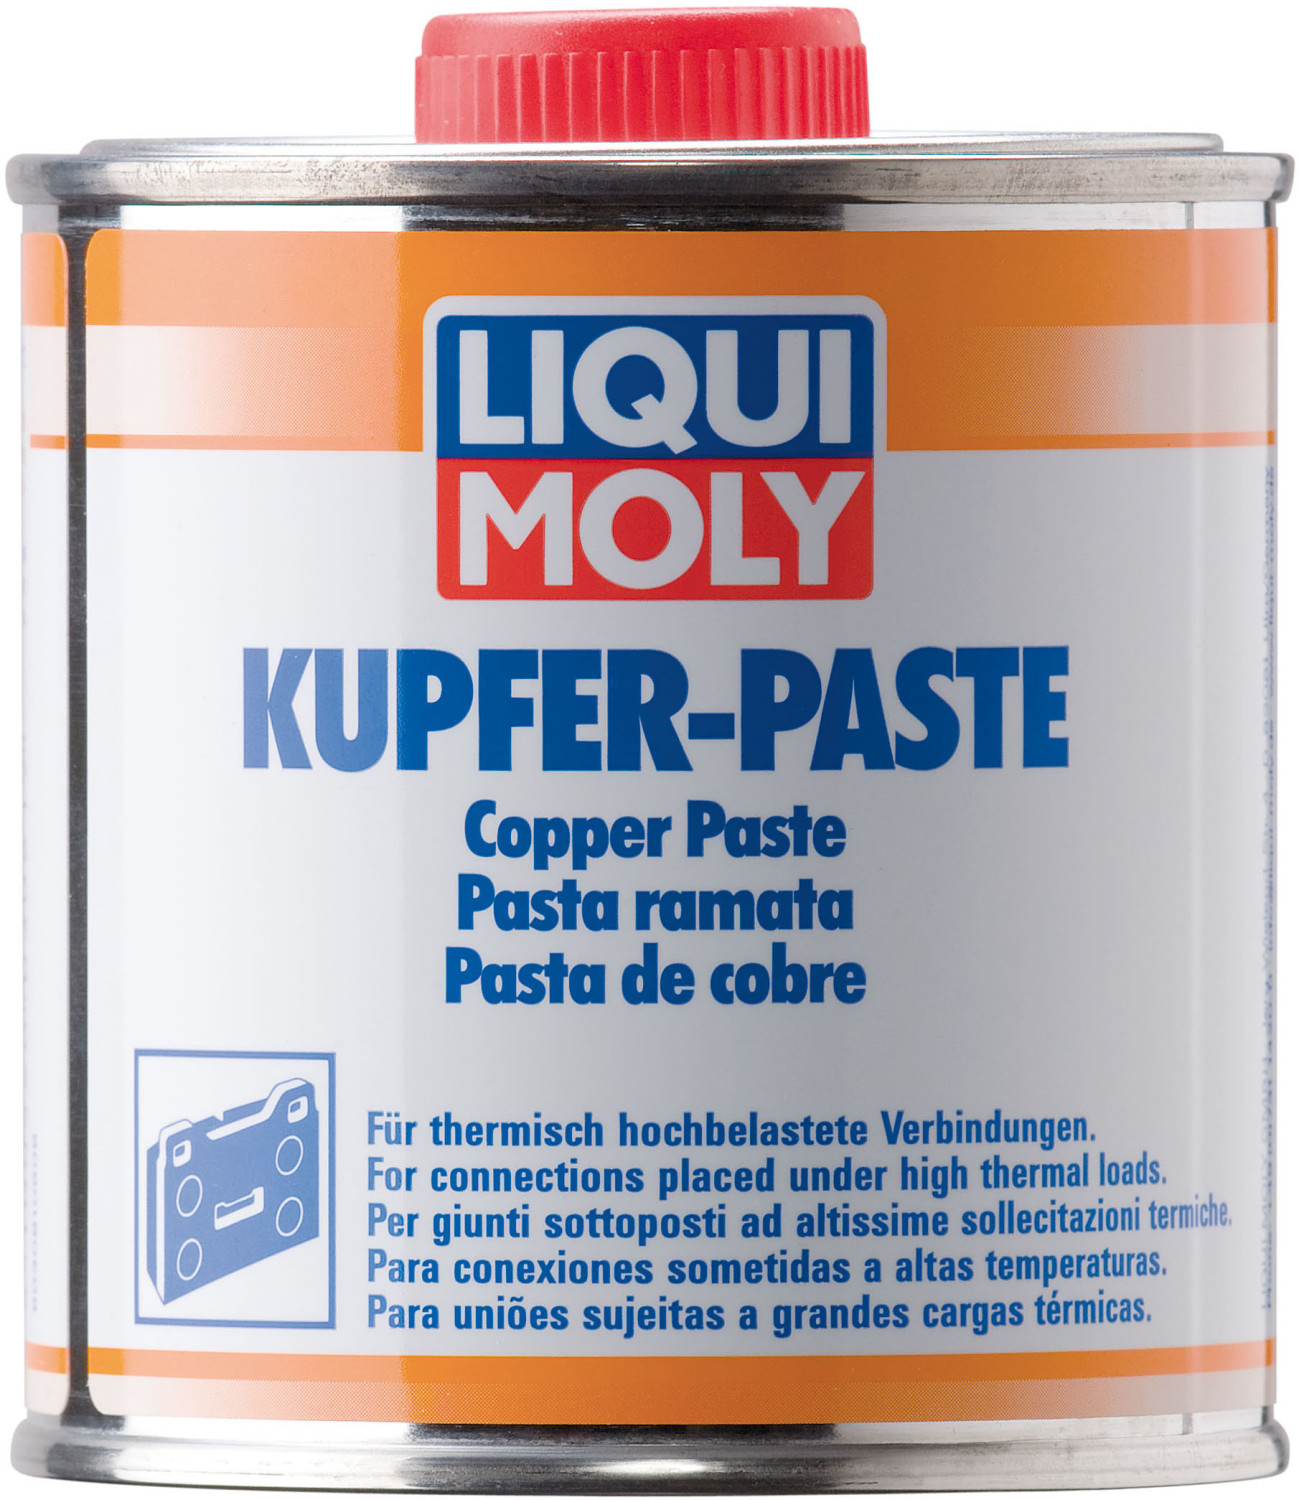 LIQUI MOLY Kupfer-Paste - 250g (3081) ab 15,44 €